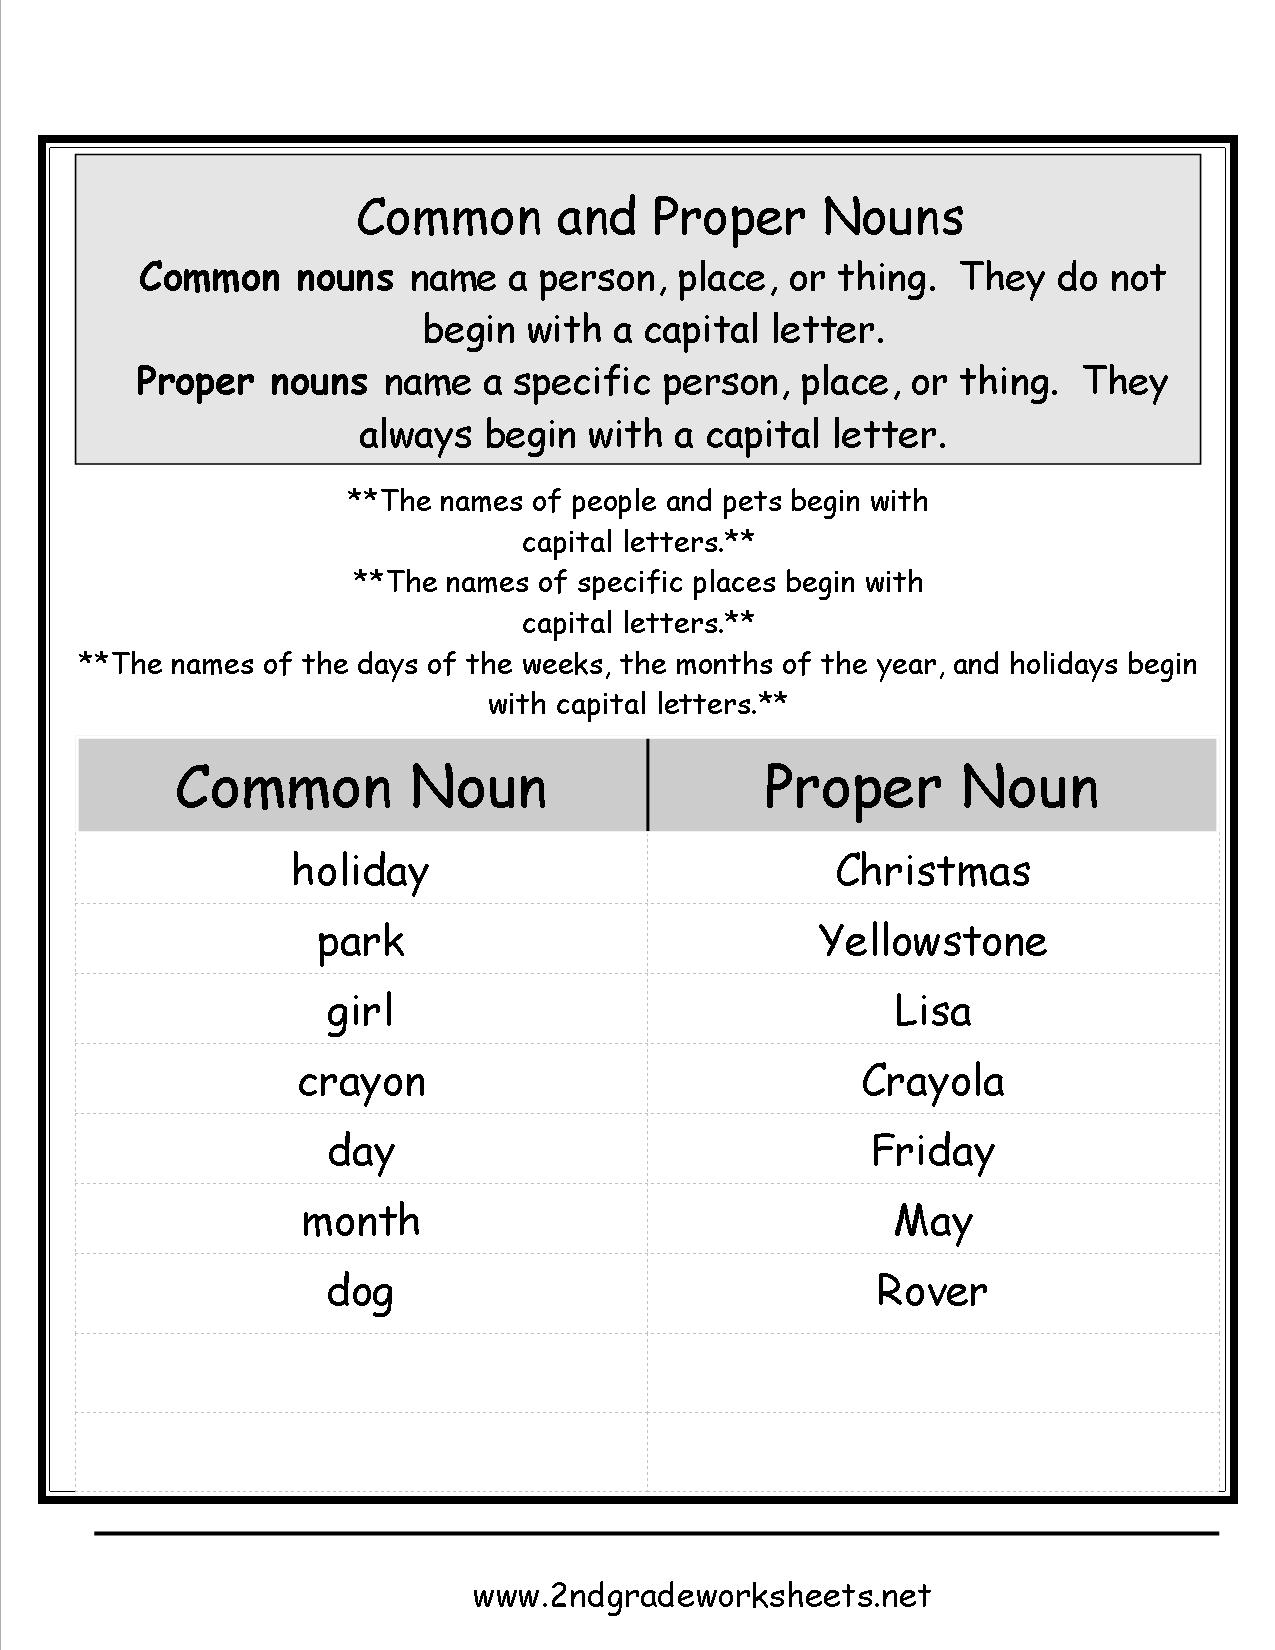 Common Noun And Proper Noun Worksheets For Grade 2 Pdf